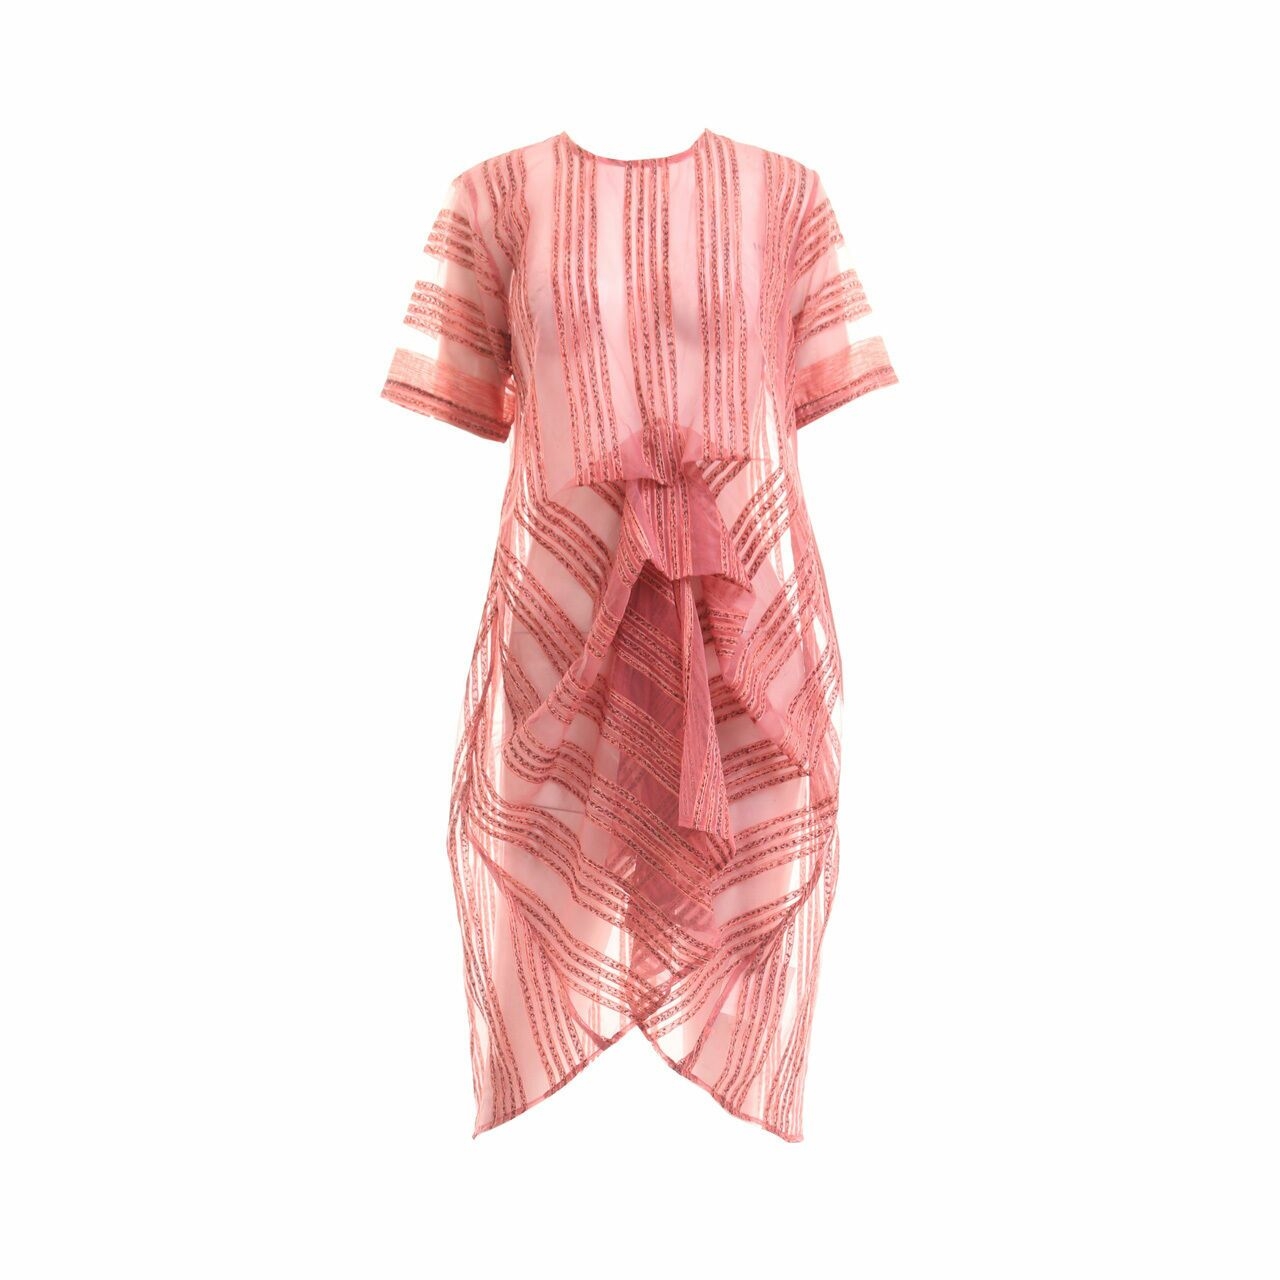 MYVB Pink Sheer Mini Dress